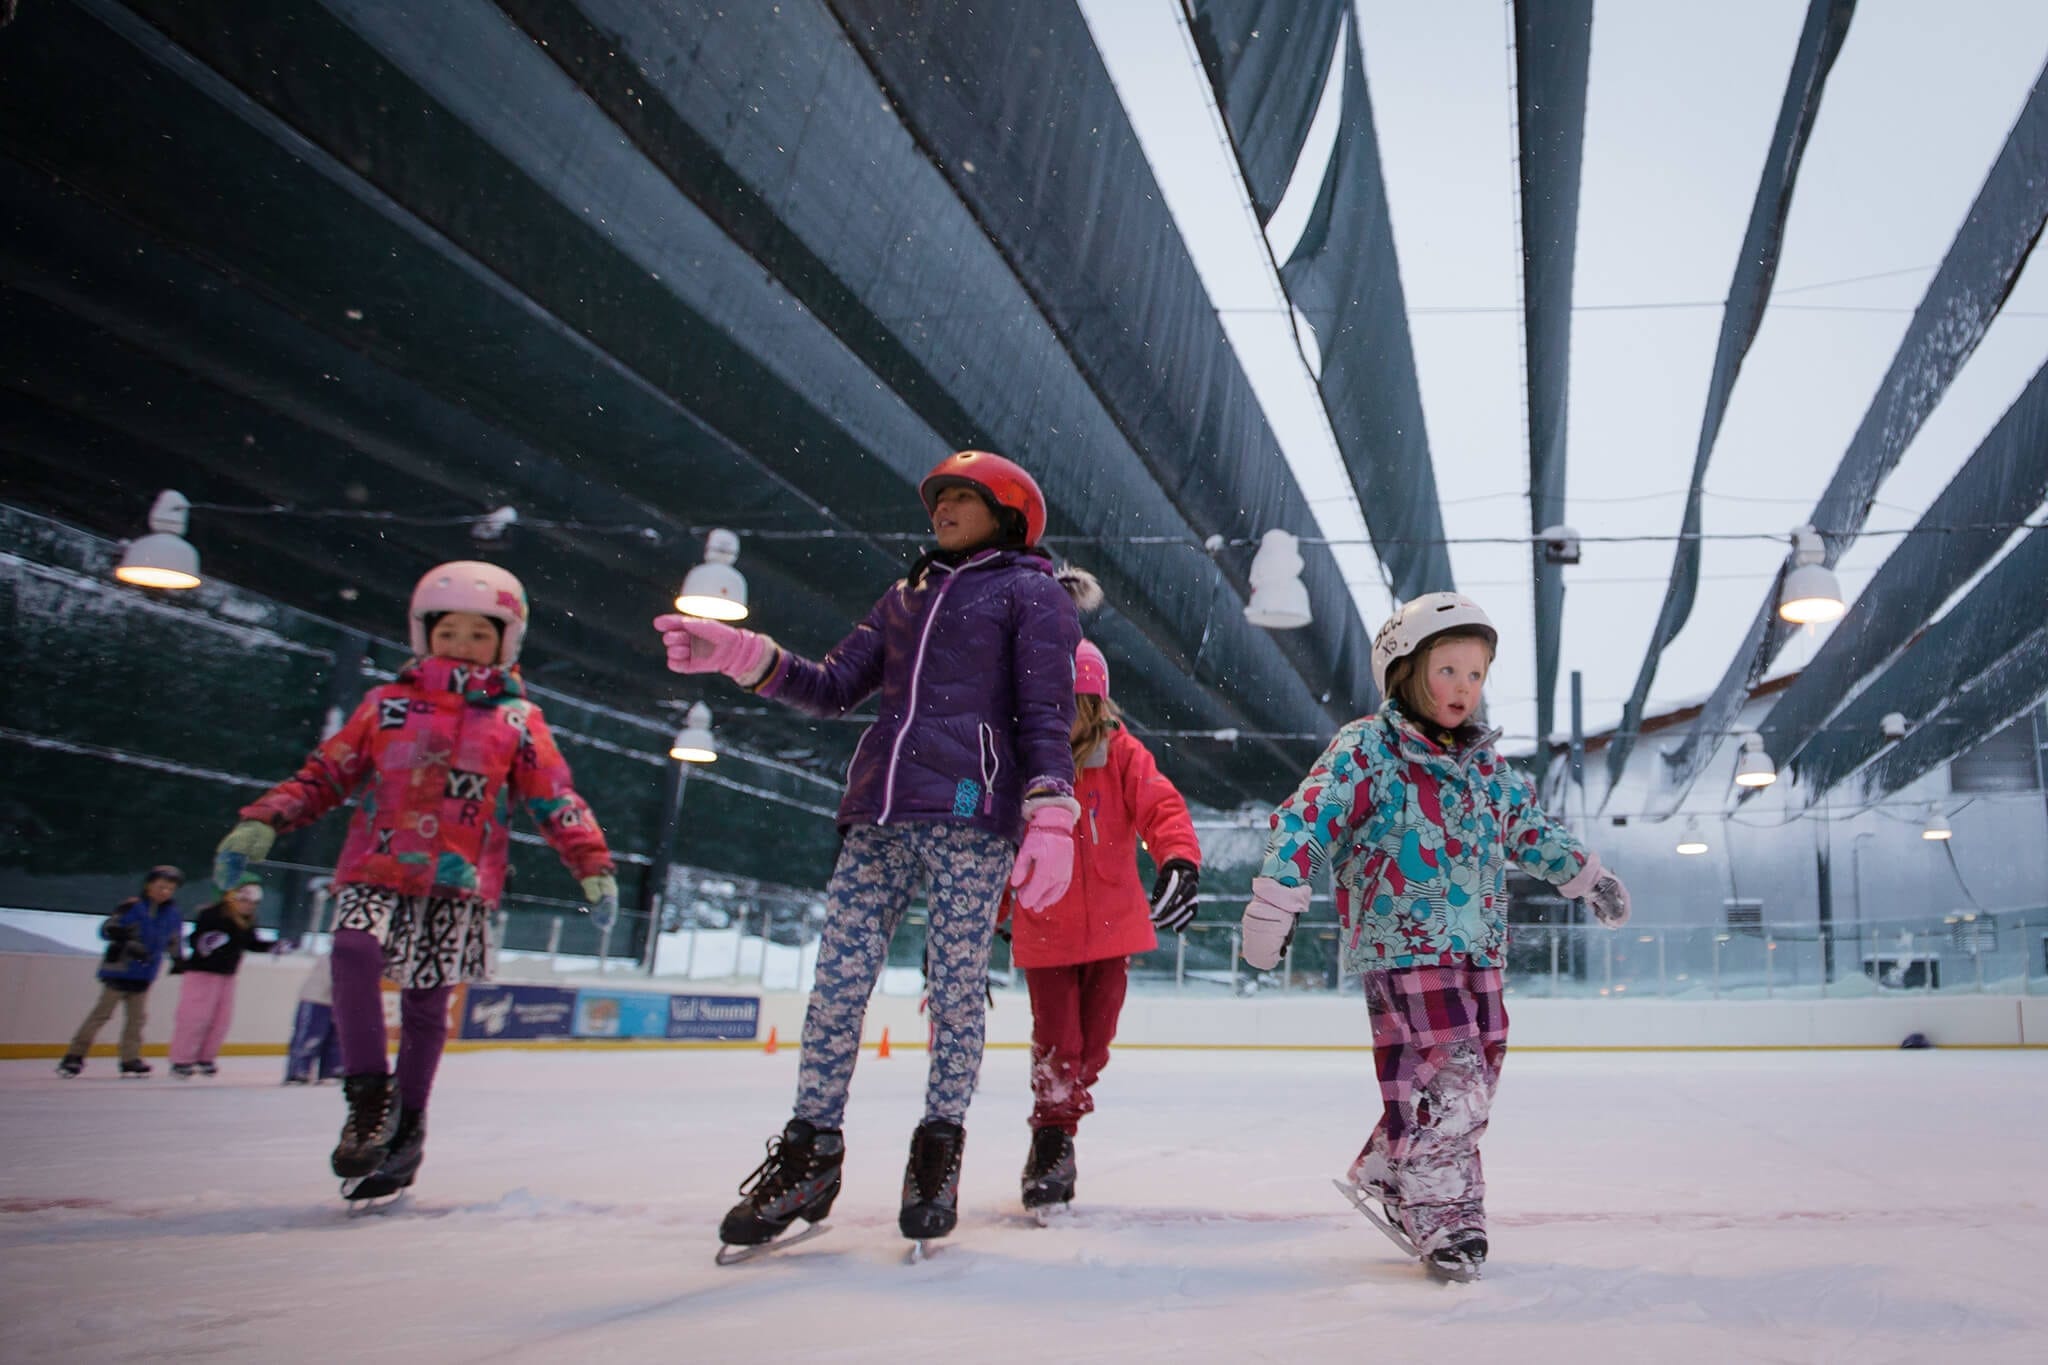 Kids ice skating at the ice arena in Breckenridge